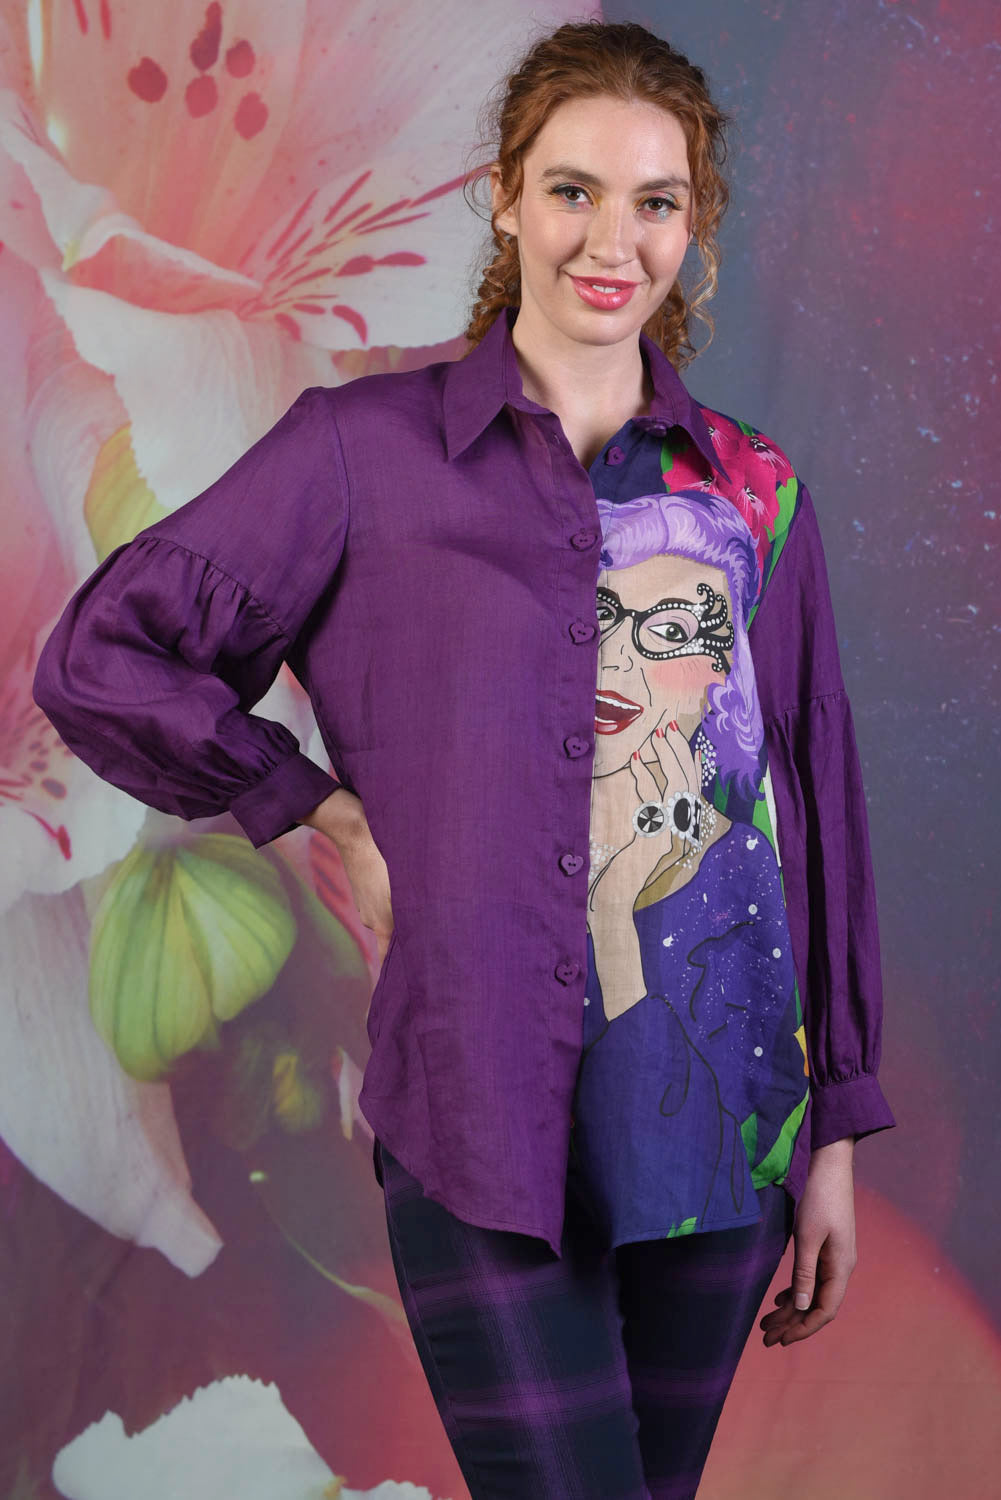 Model wearing Popo Linen Shirt - Edna by Annah Stretton